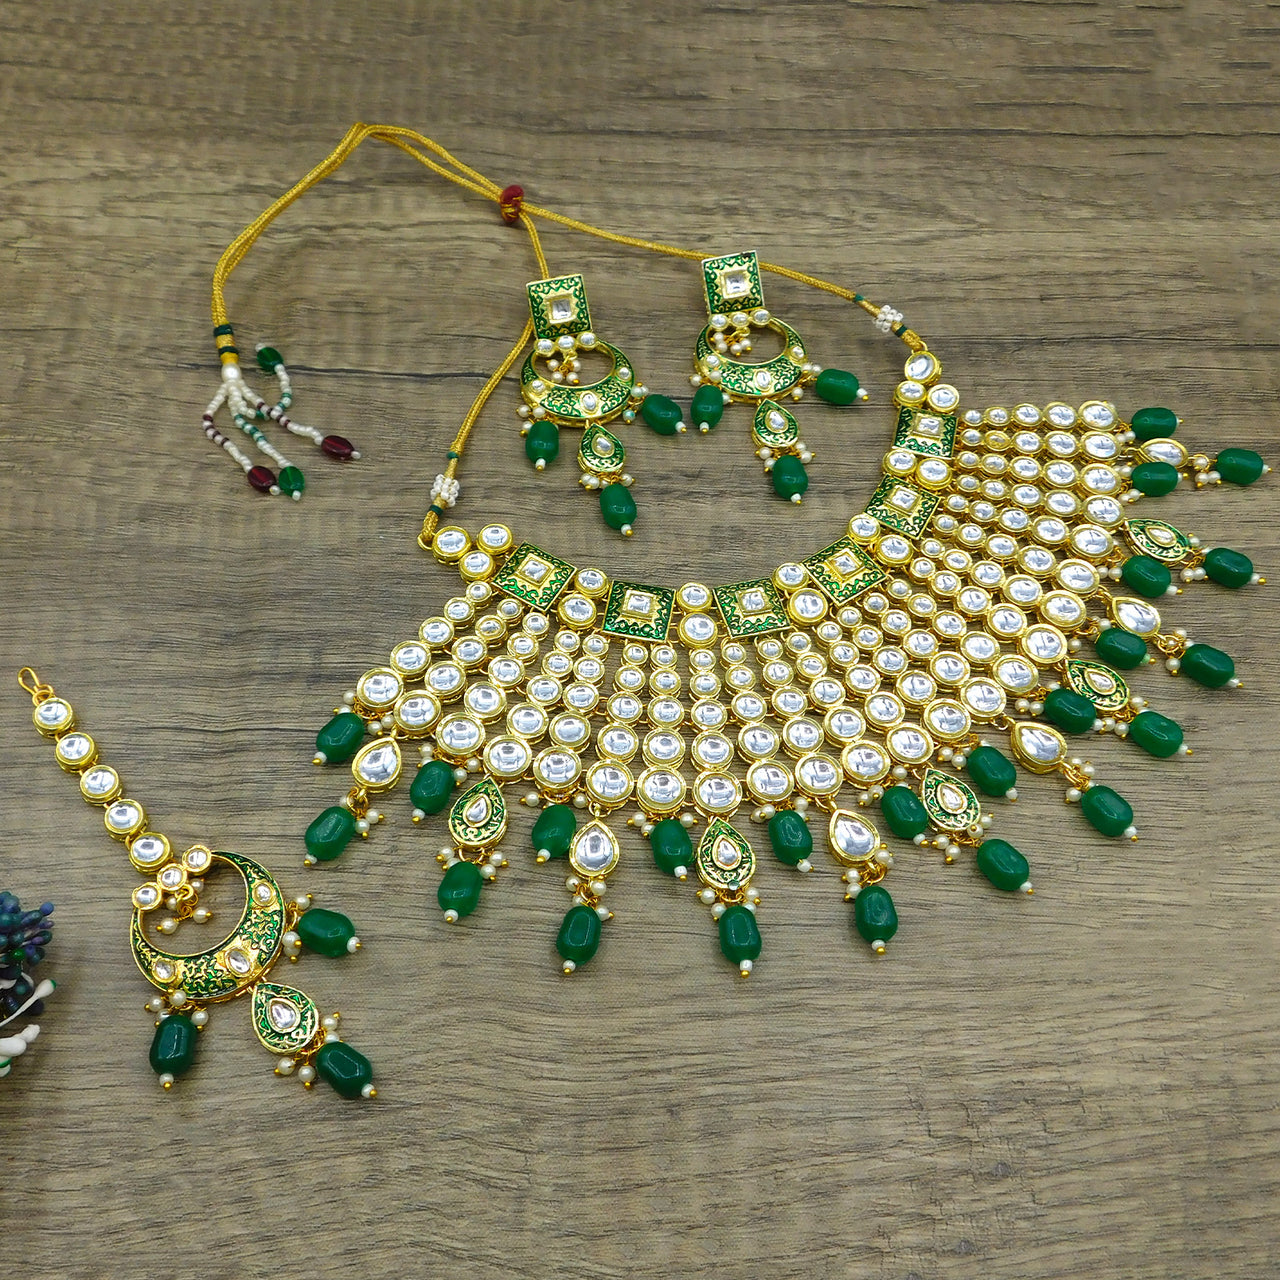 Sujwel Gold Plated Kundan Meenakari Choker Necklace Set (08-0469)